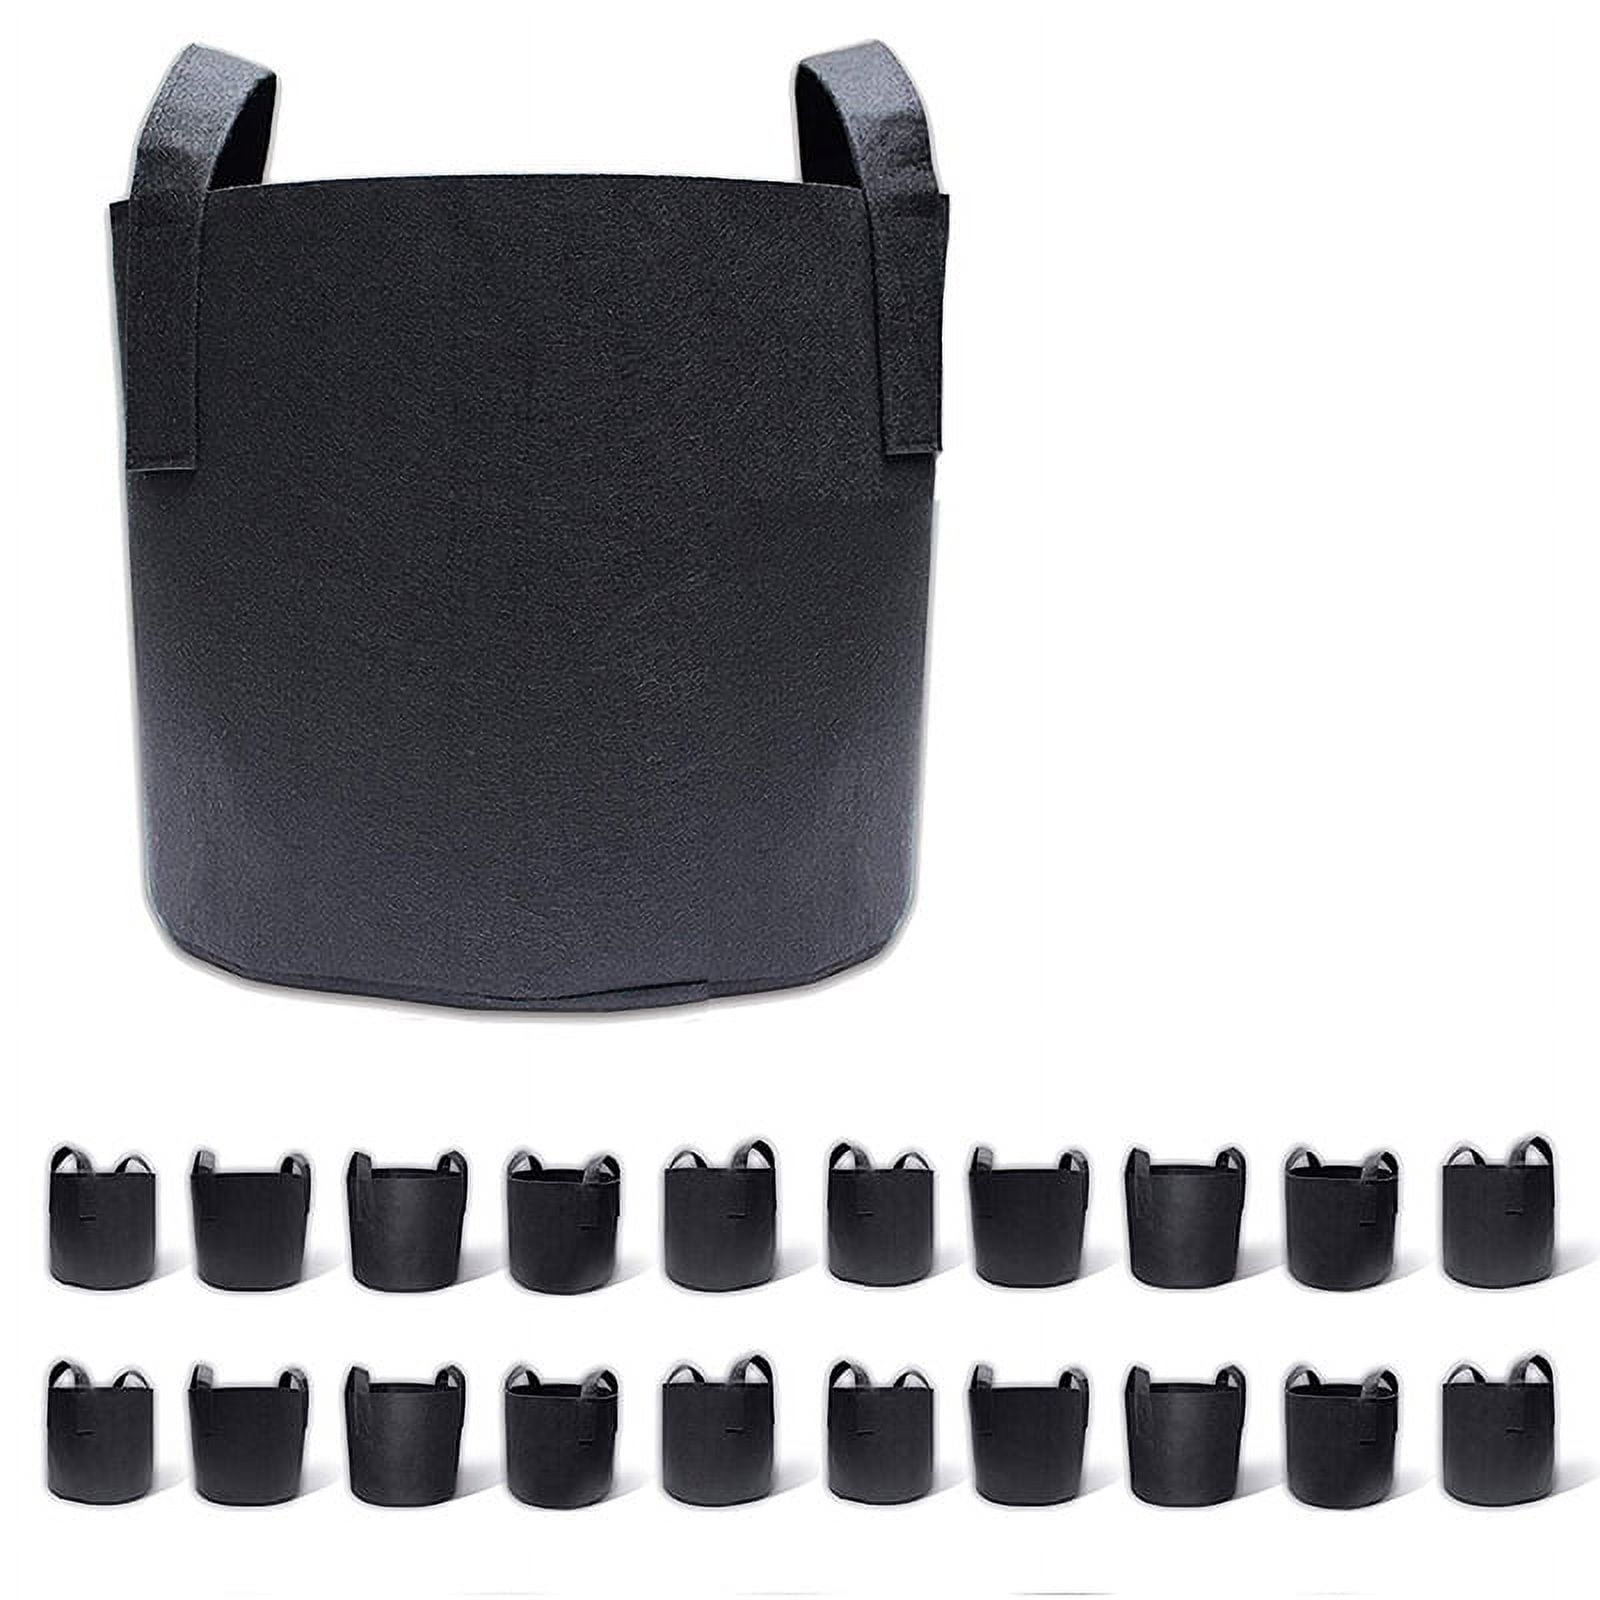 247 Garden - 3 Gallon Aeration Fabric Pots - Black with Handles - 5-Pa